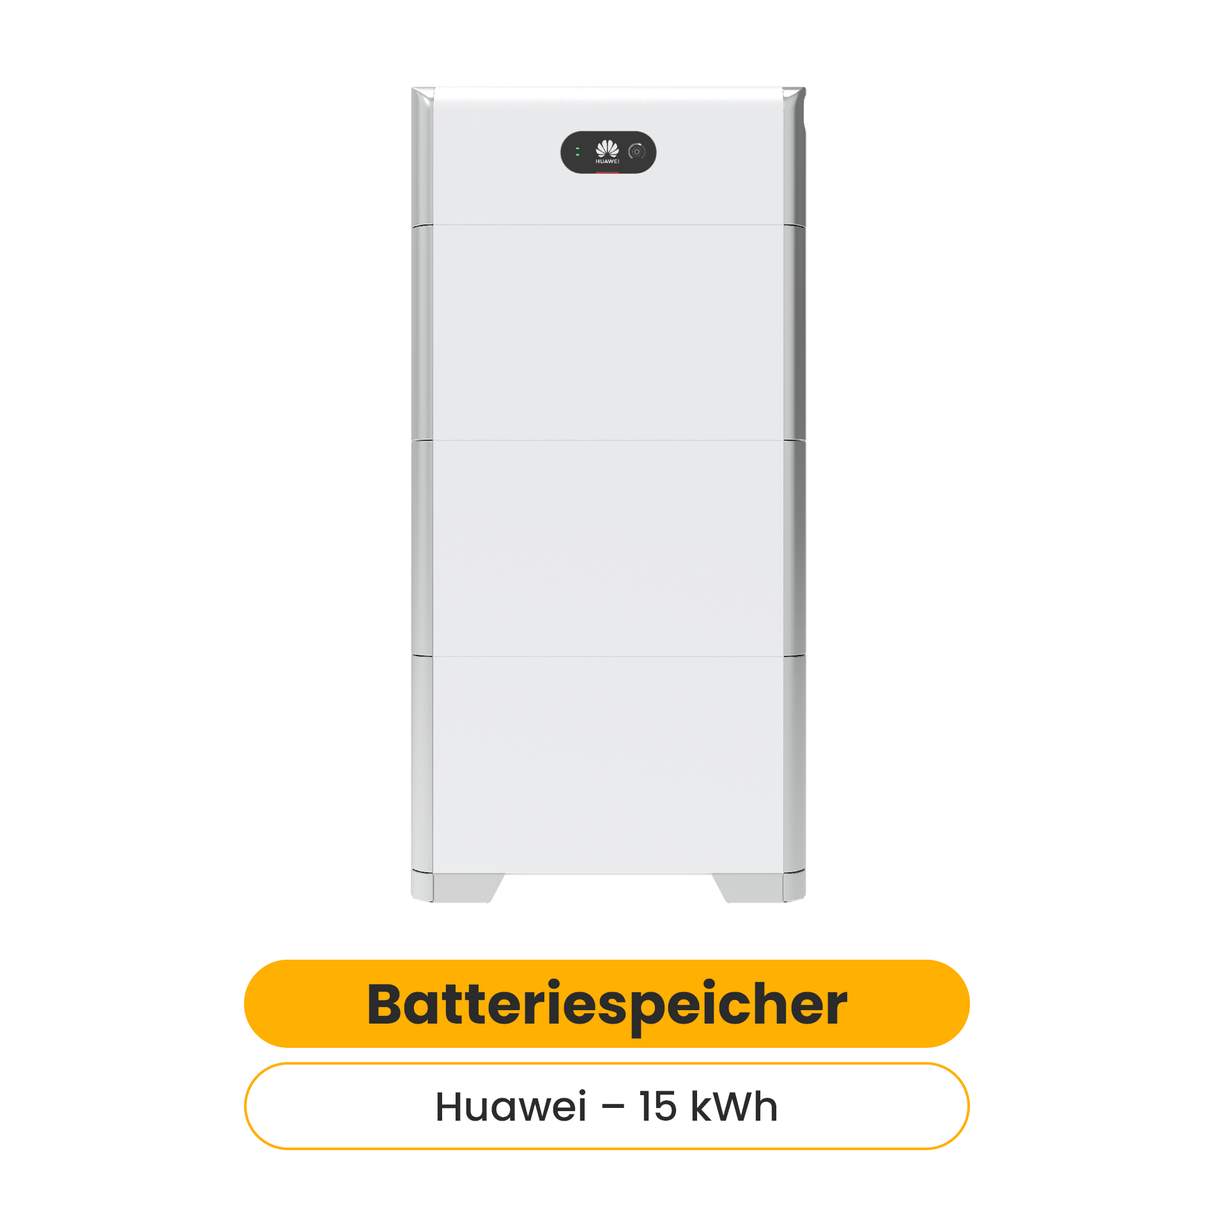 Huawei Batteriespeicher LUNA2000-15-S0 15 kWh